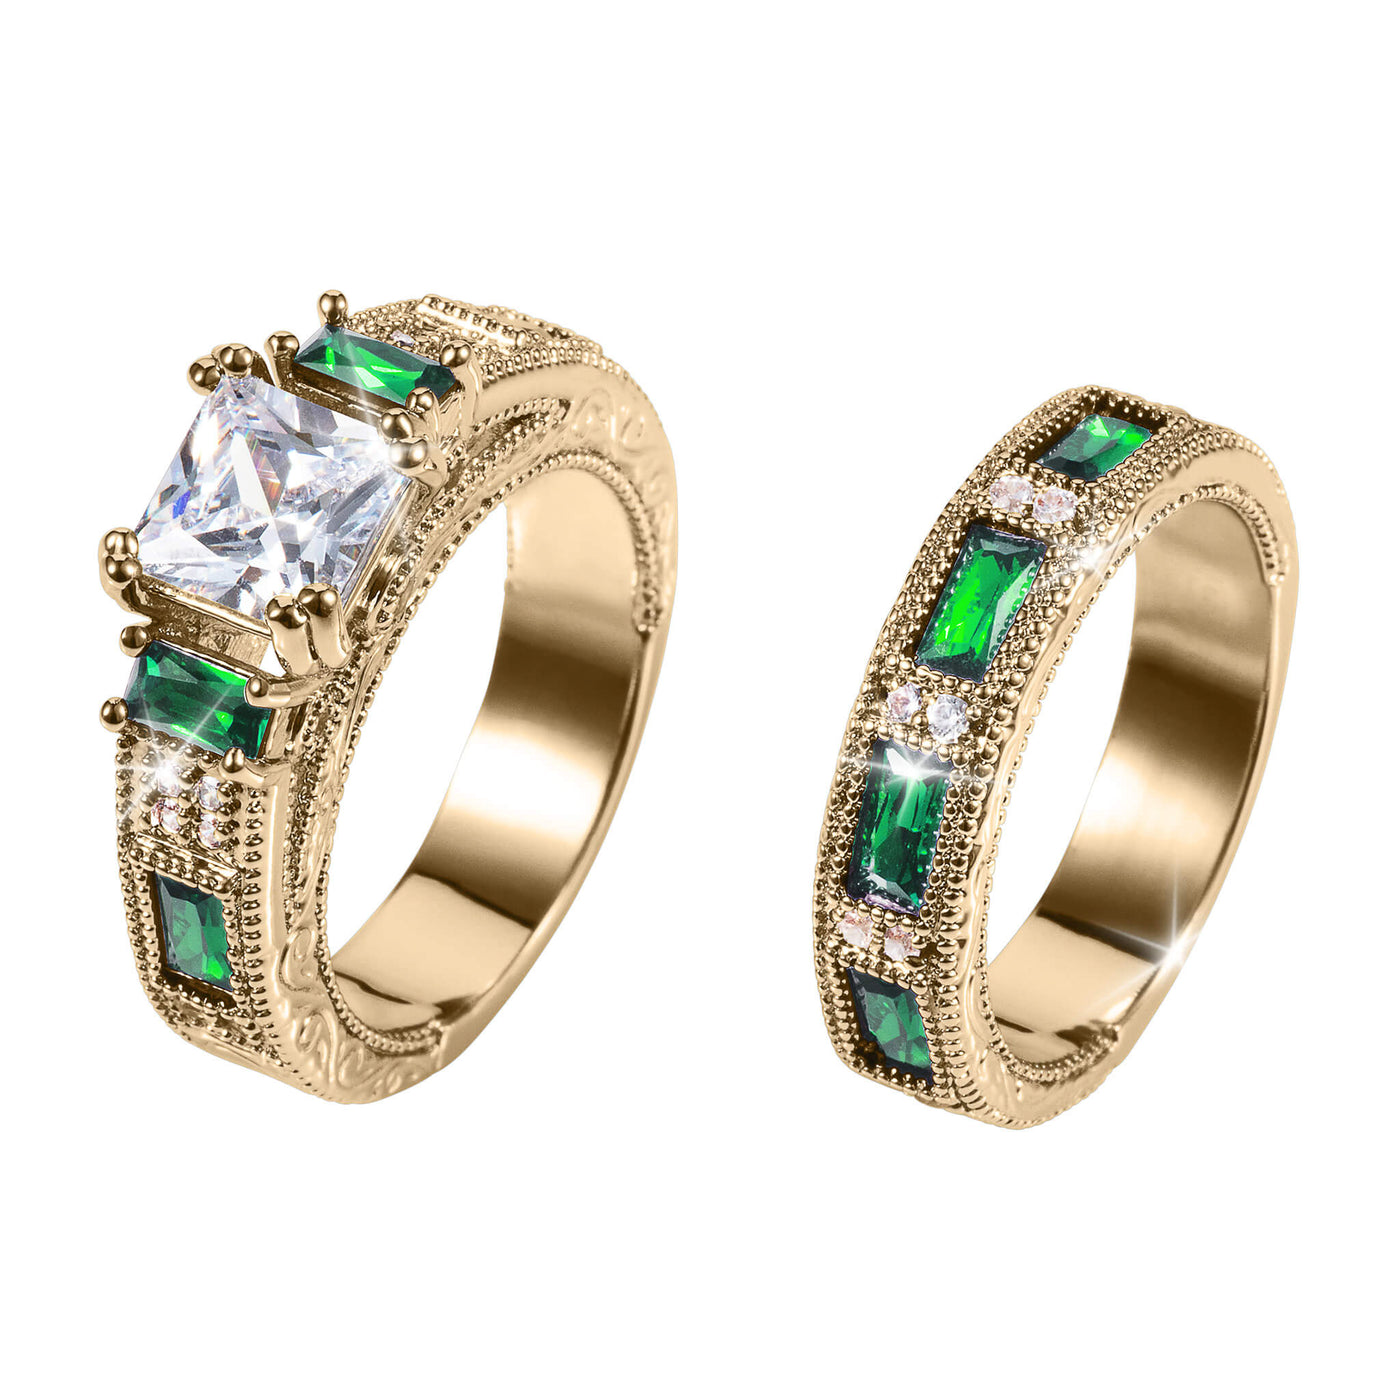 Daniel Steiger Everlasting Elegance Bridal Ring Set